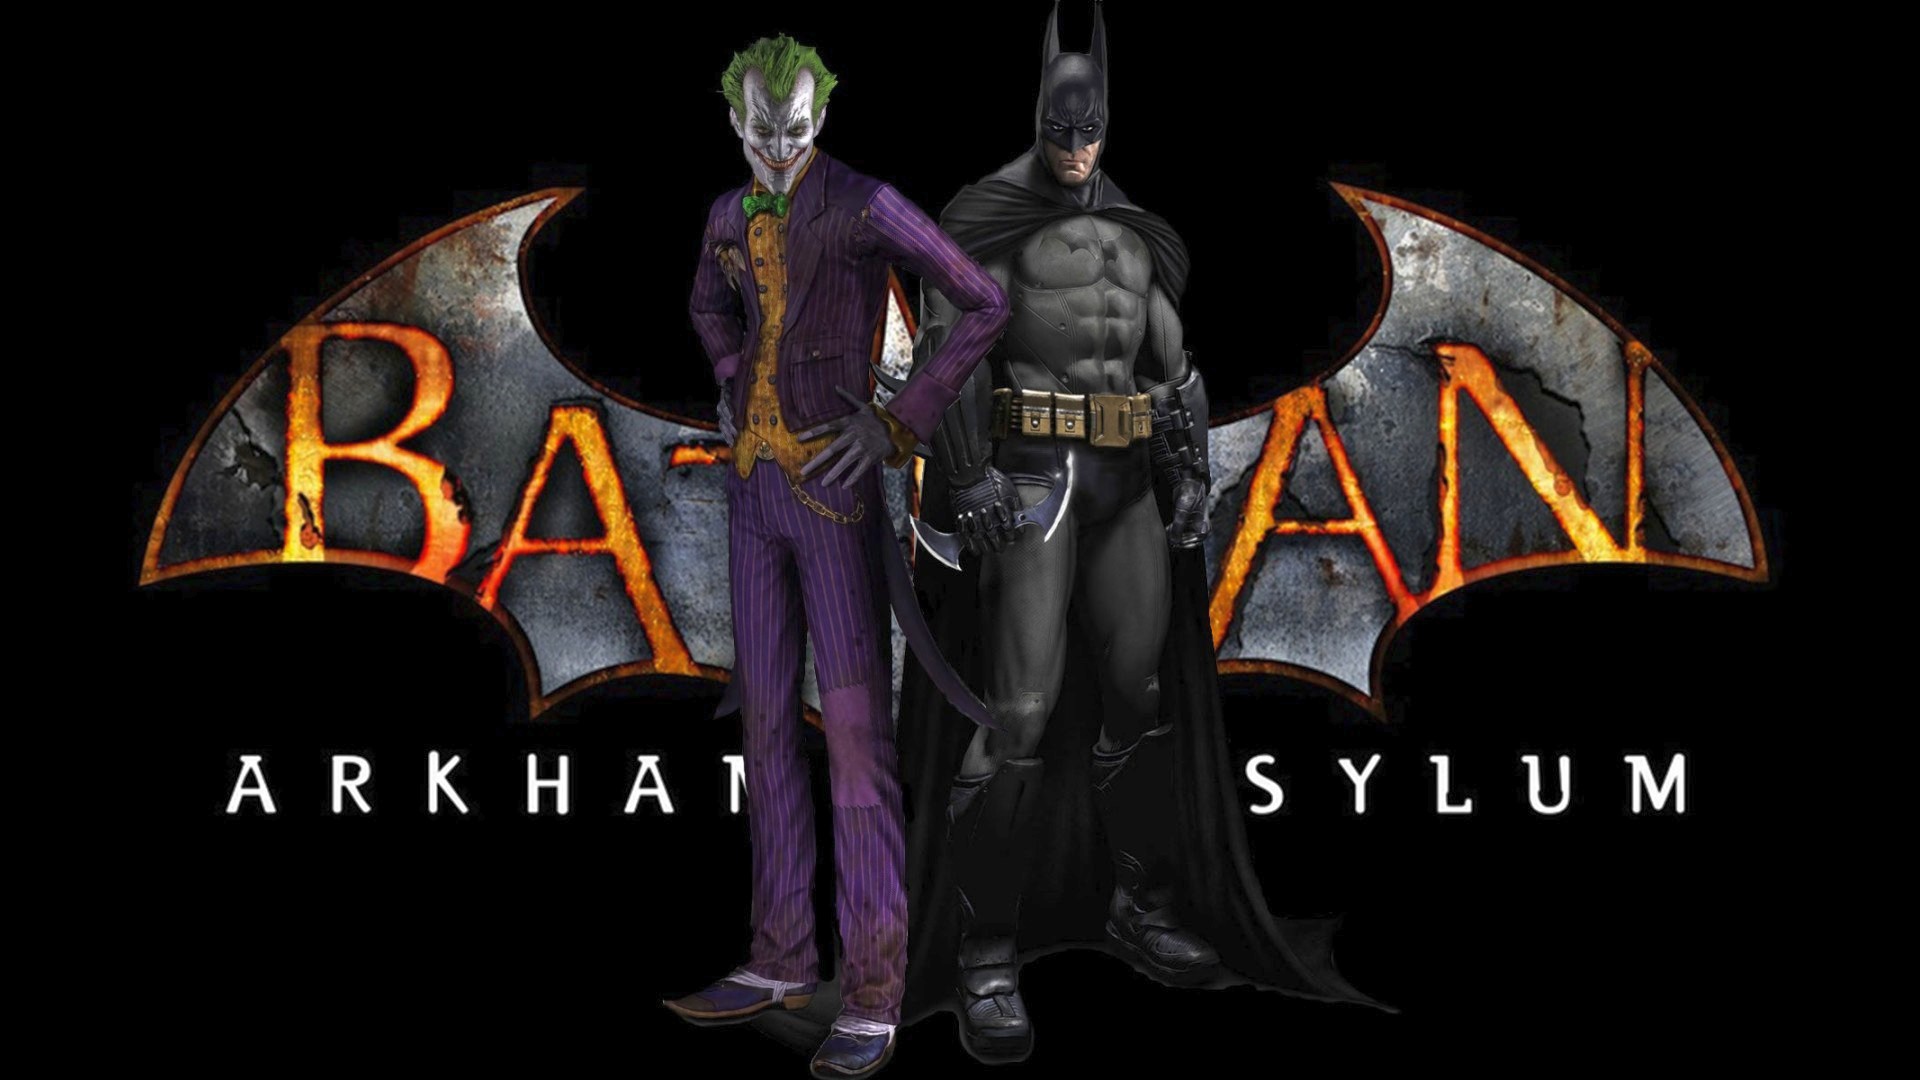 Скачать обои бесплатно Видеоигры, Бэтмен: Лечебница Аркхема картинка на рабочий стол ПК